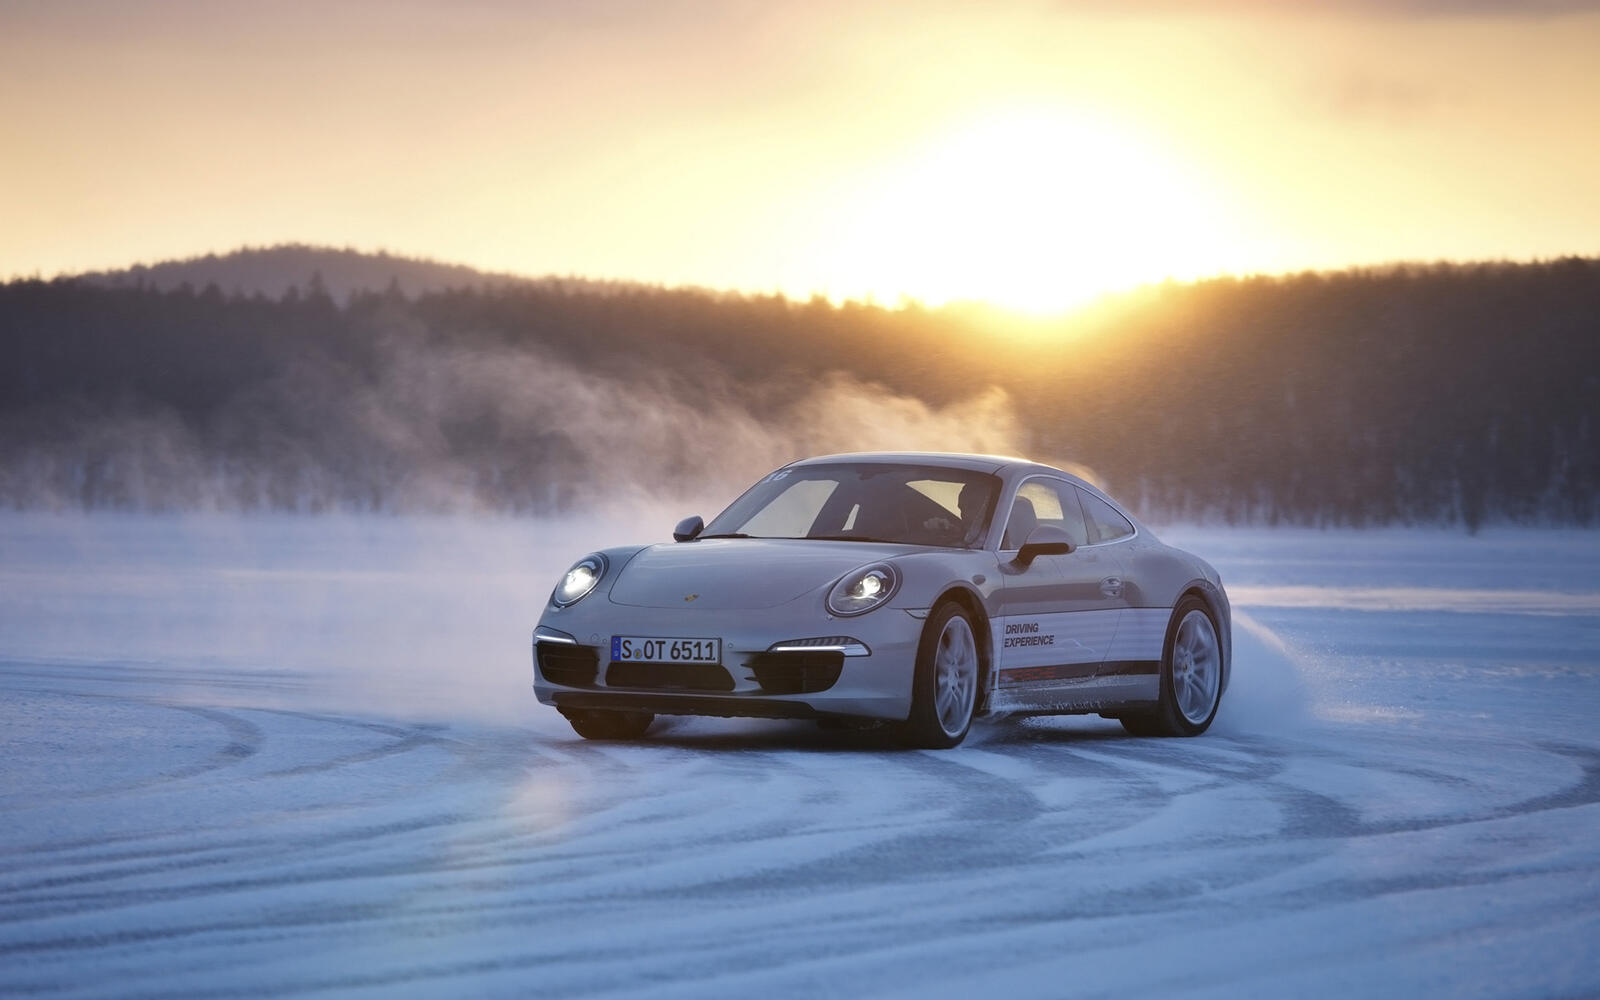 Free photo Drifting a Porsche in the snow